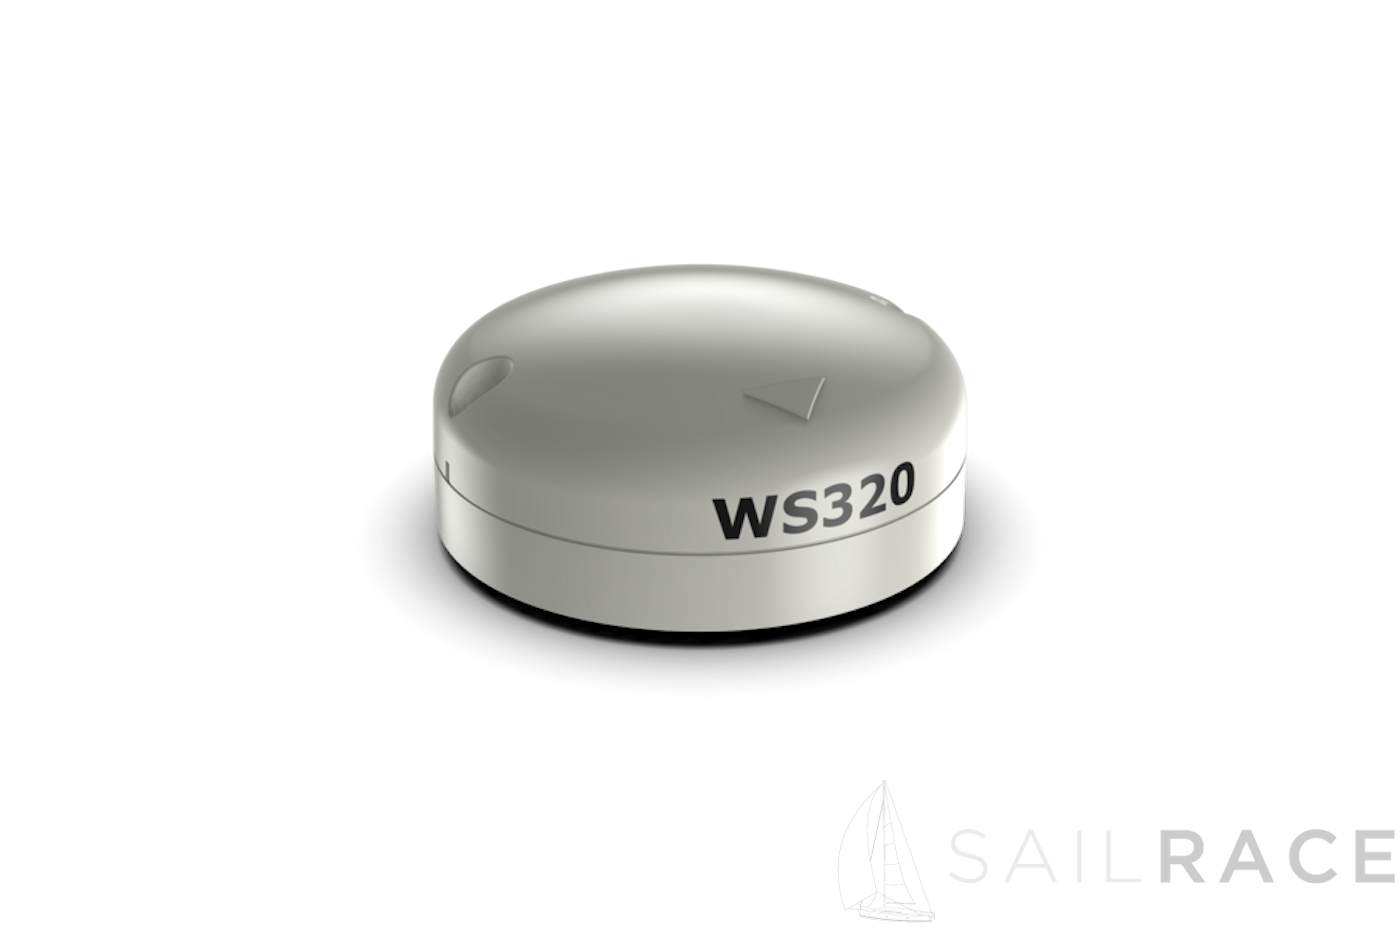 B&G  Ws320 Wireless Interface - image 2